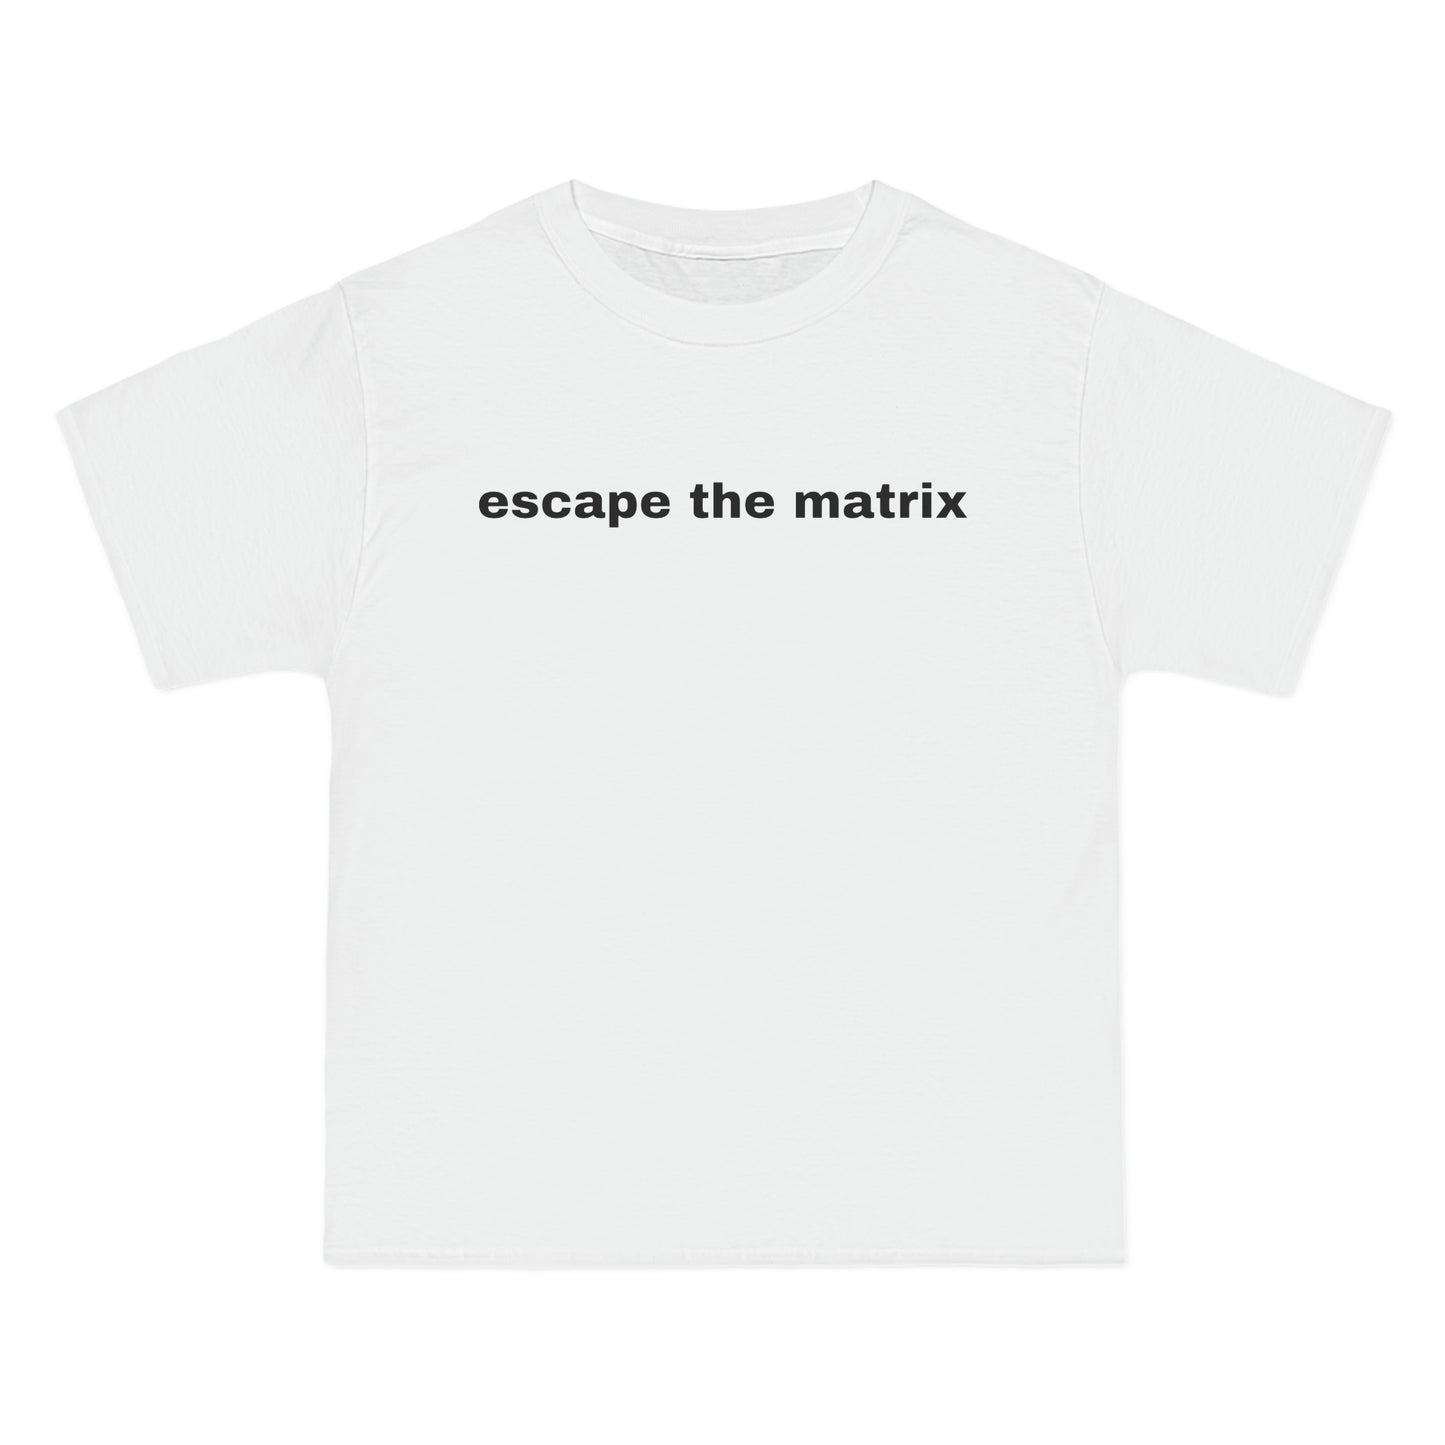 escape the matrix Tee